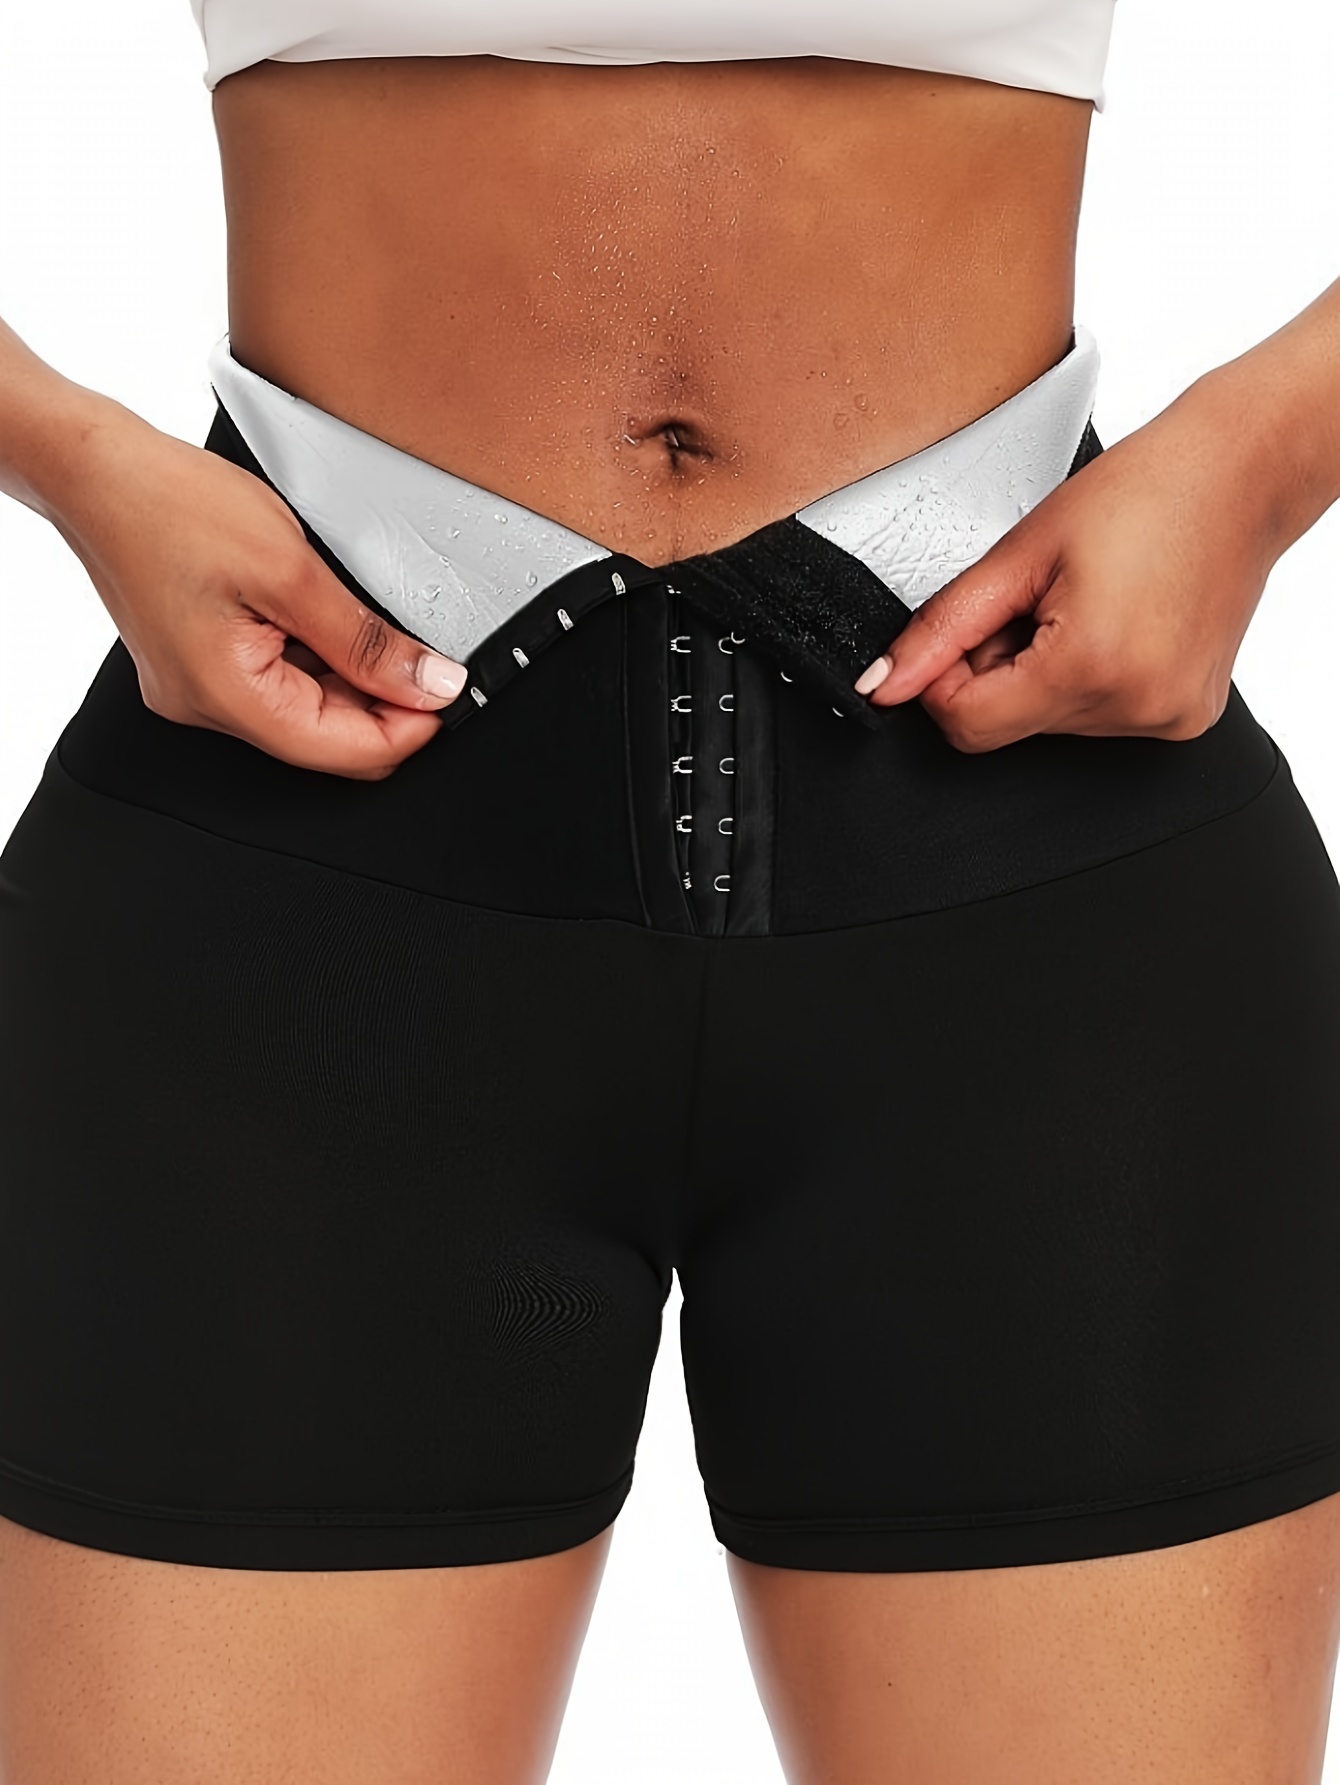 Tummy and Hip Lift Pants Shapewear,Tummy Control Pants for Women